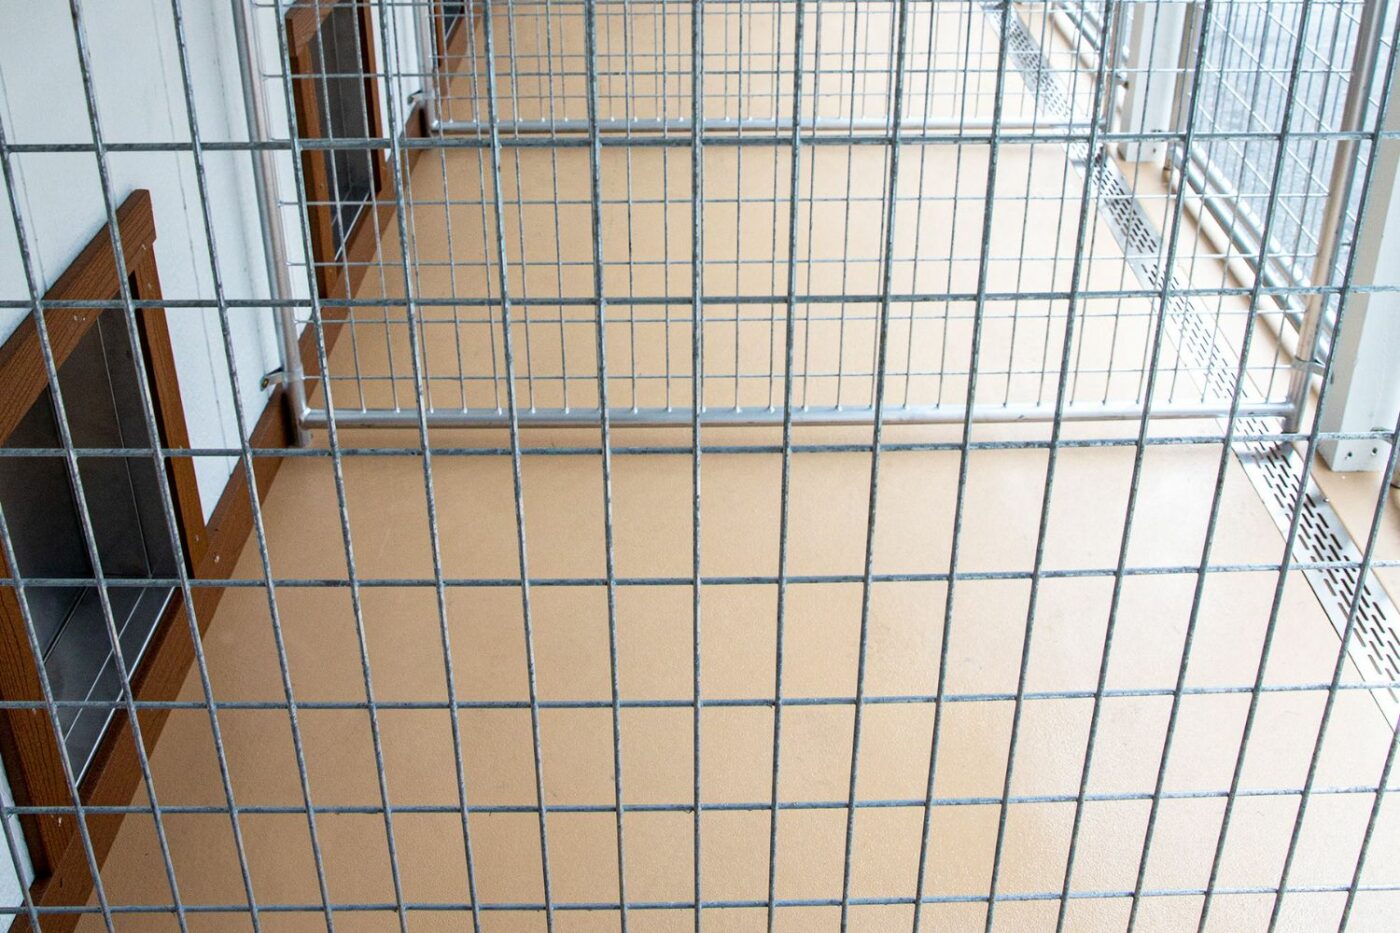 poly urea coated run floor -dog kennel fencing and flooring